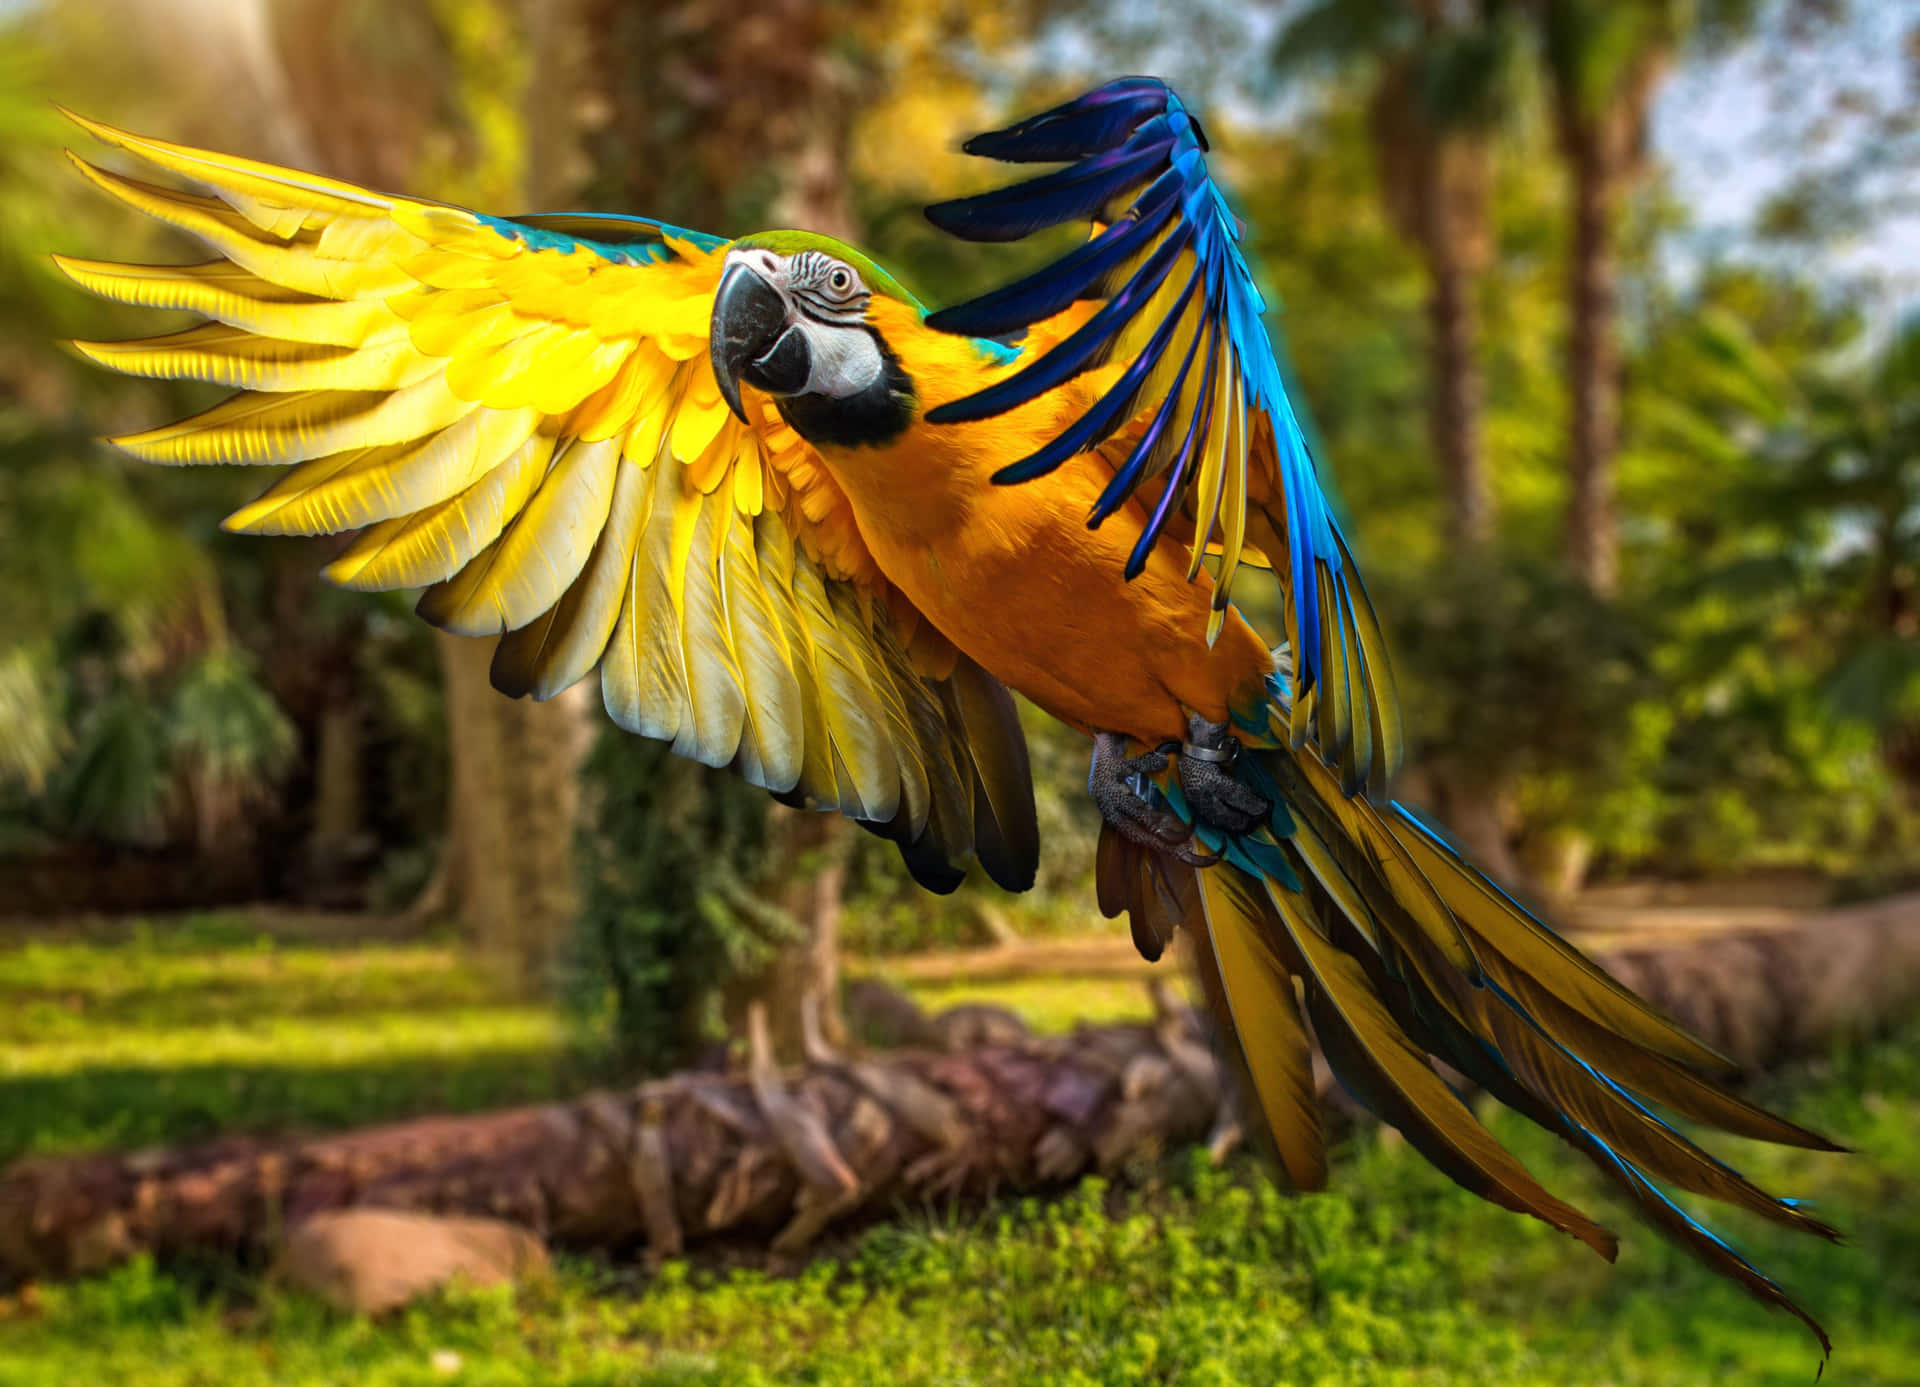 Vibrant Macaw In Flight.jpg Wallpaper